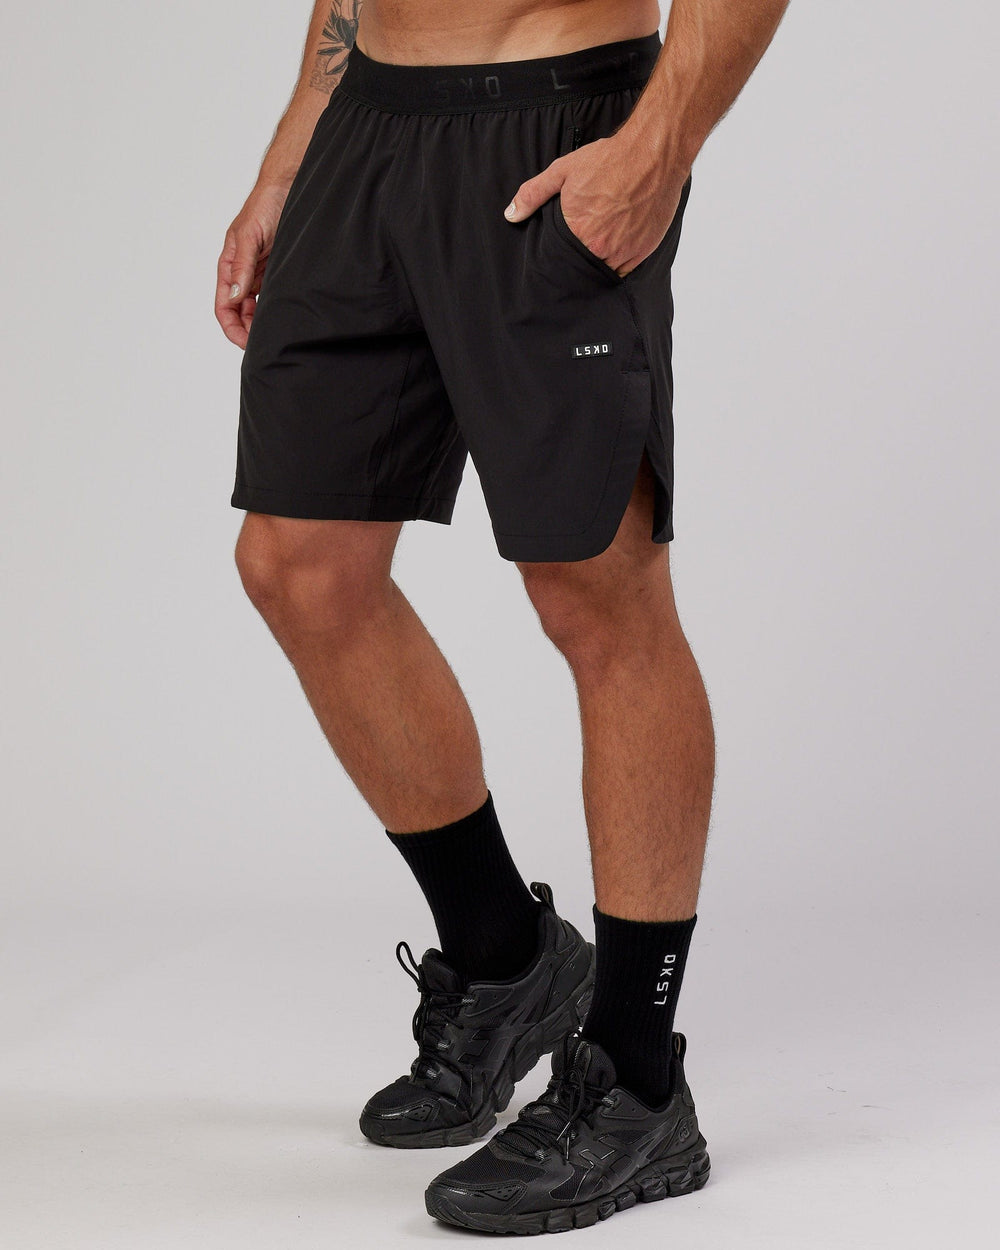 MEN'S AGILITY SHORT TIGHT, Performance Black, Shorts